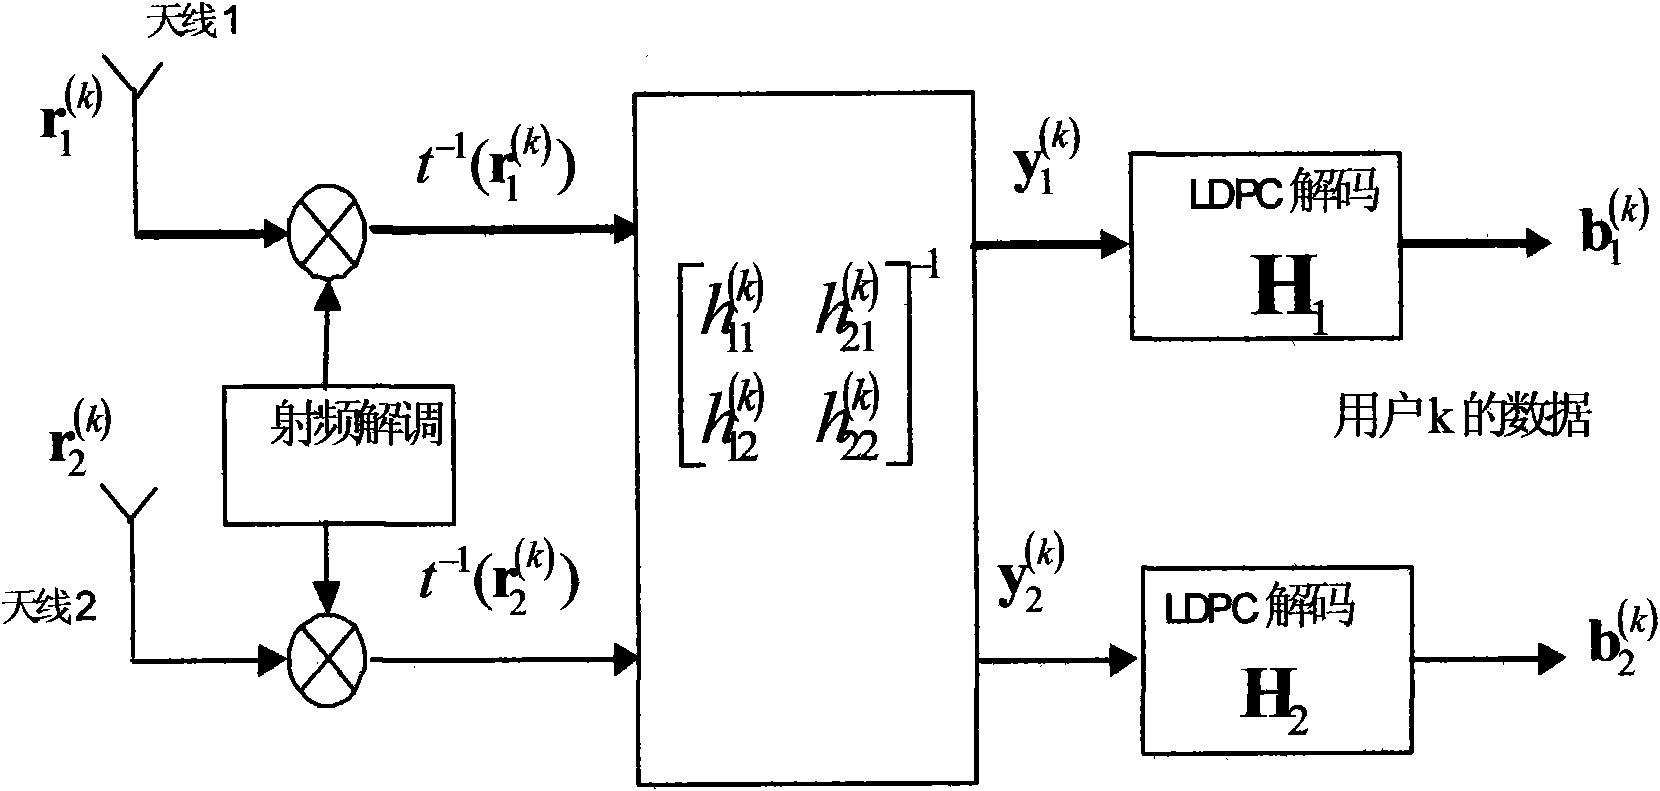 Uplink MIMO-LDPC modulation and demodulation system